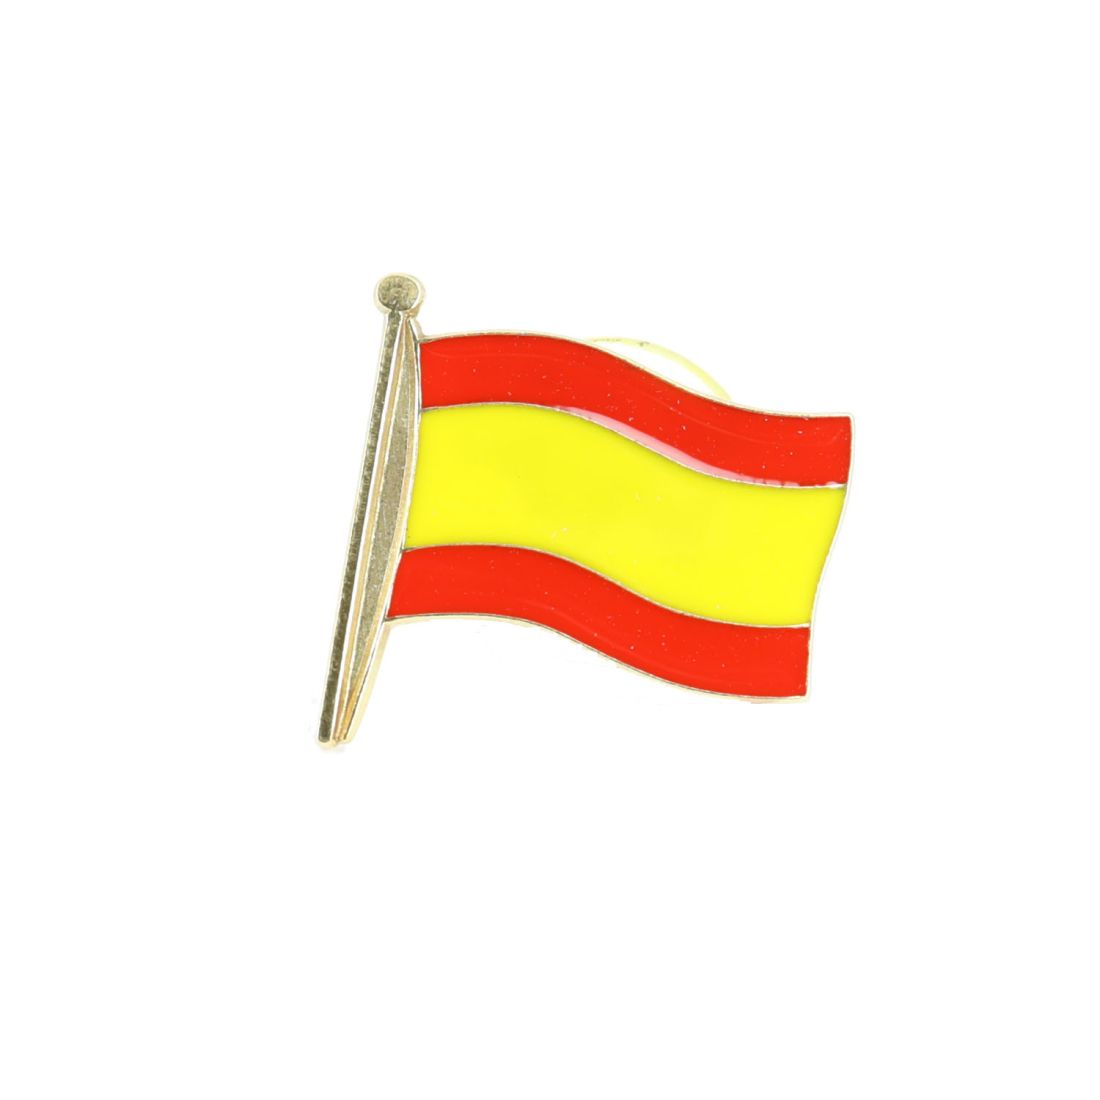 Pin's drapeau Espagnol - Espagne - Tony et Paul, Made in France à Saumur